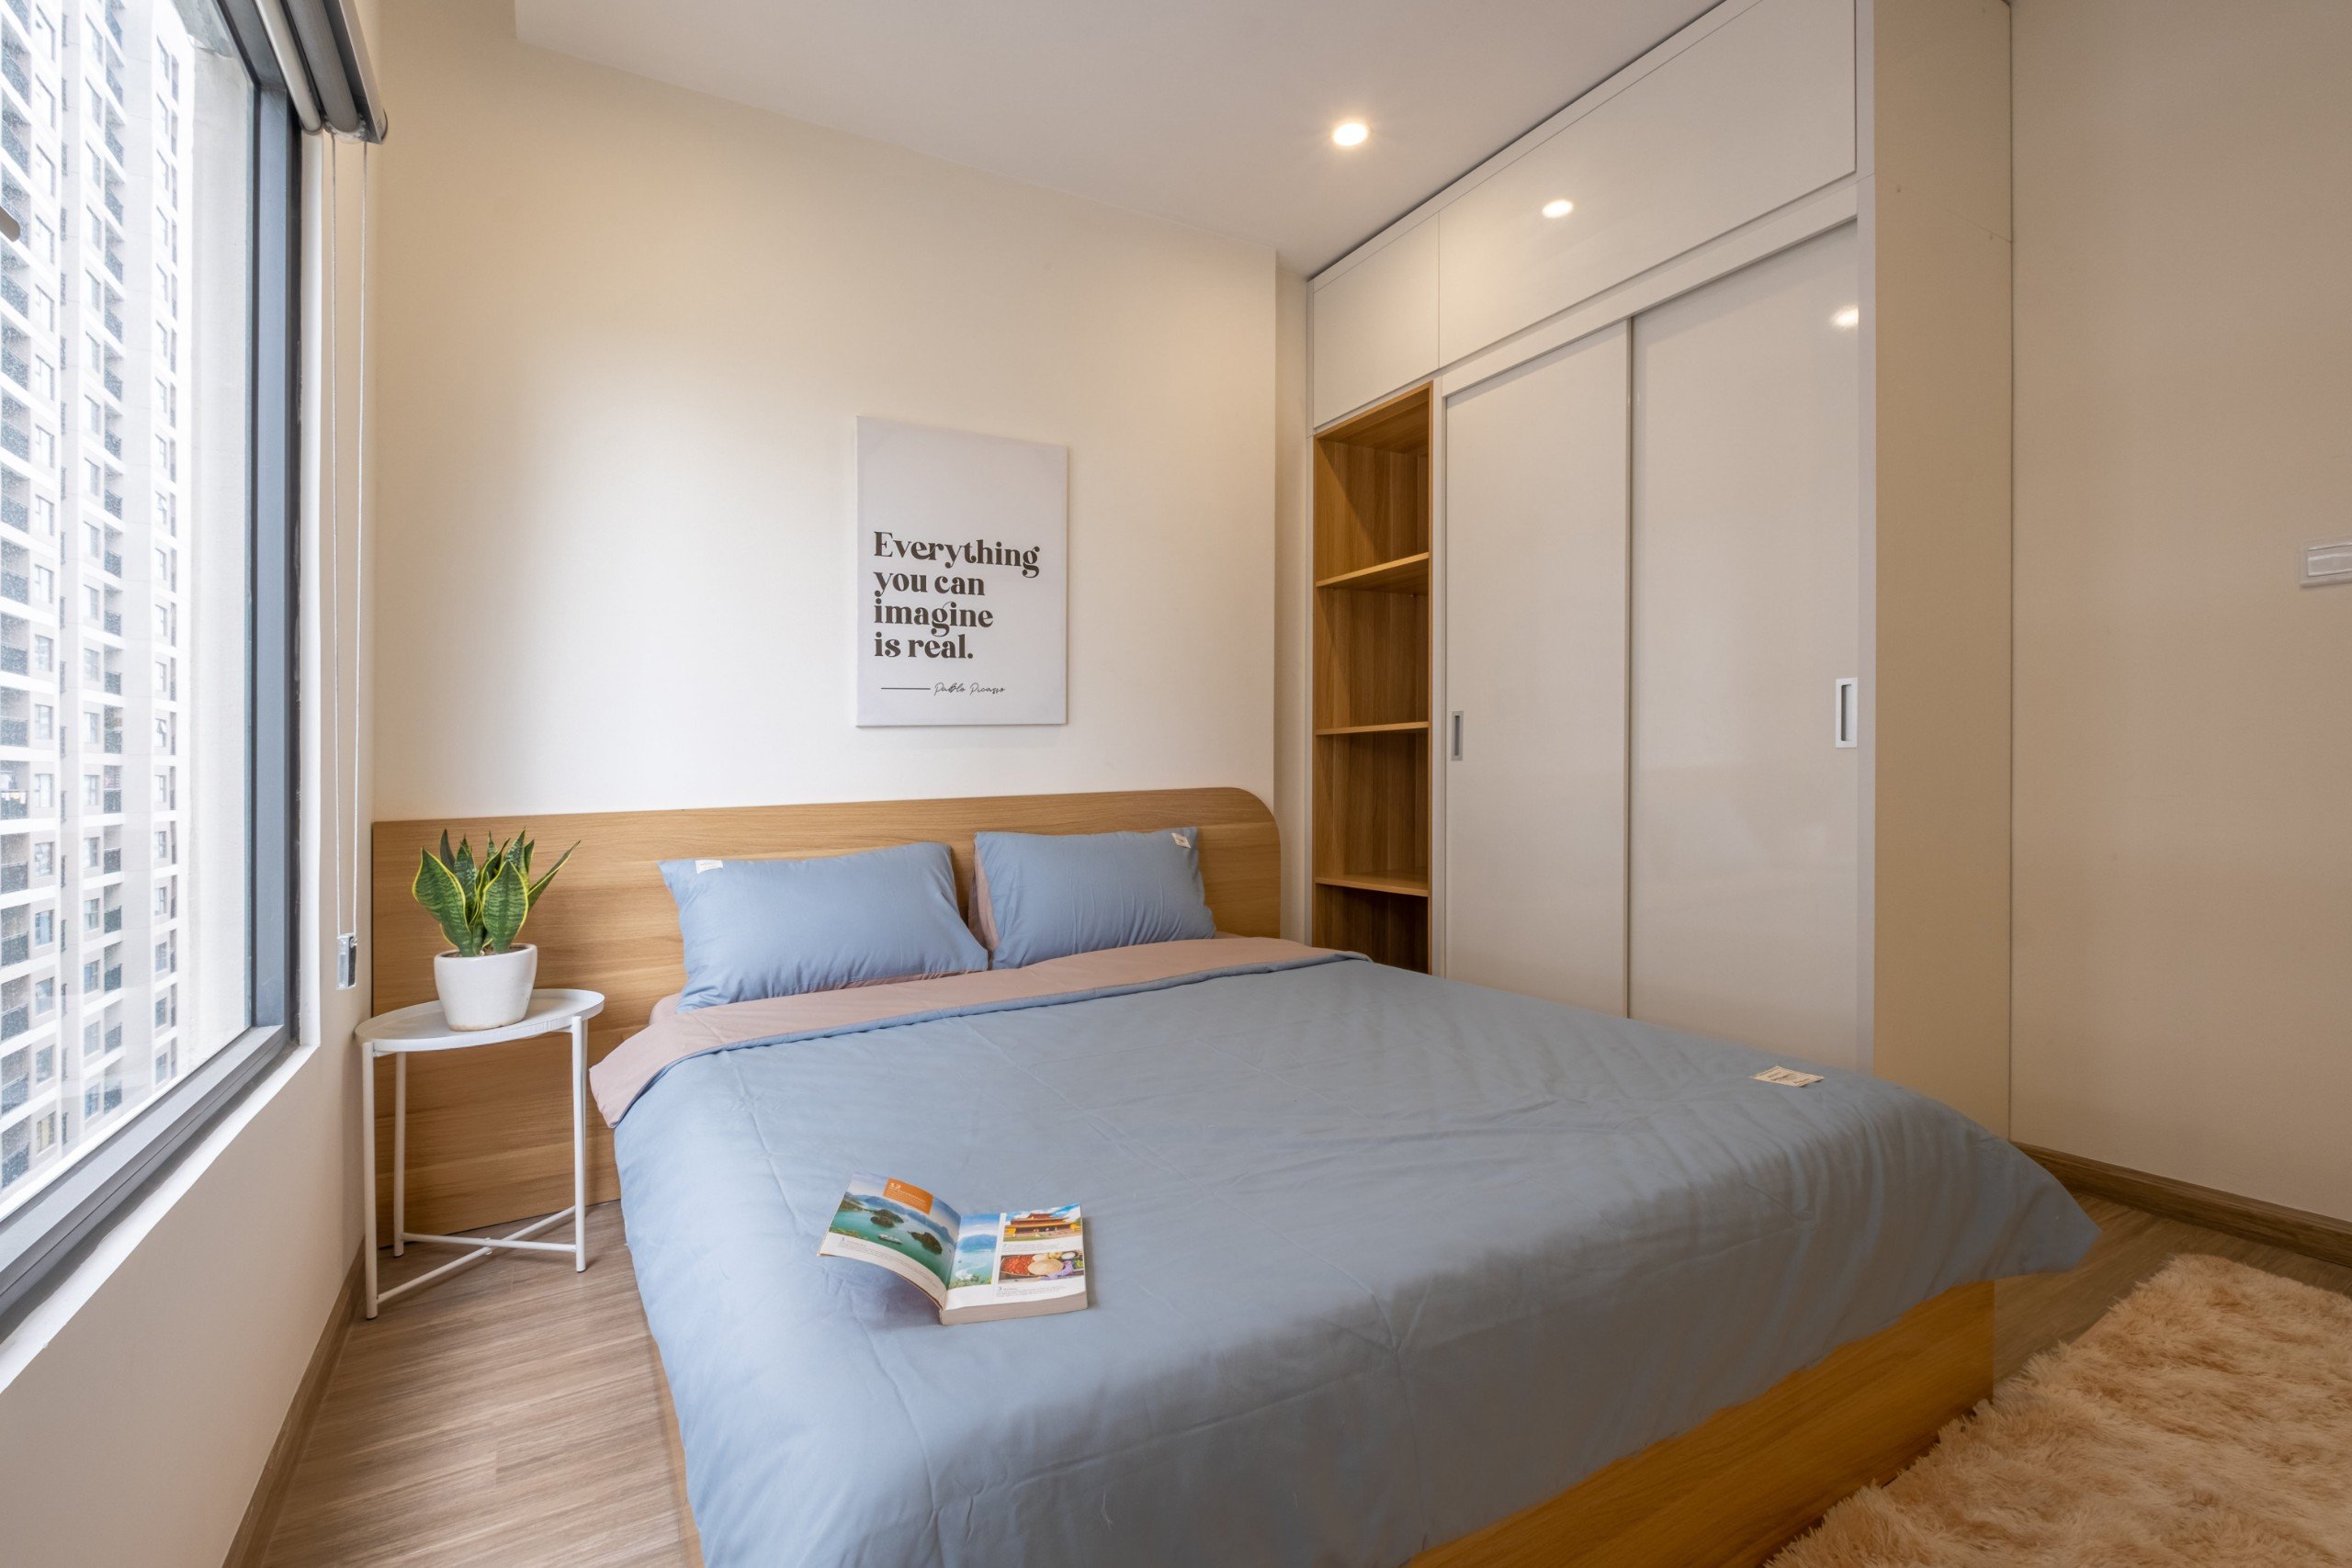 3 bedroom apartment for rent in Vinhomes Ocean Park - good price 9